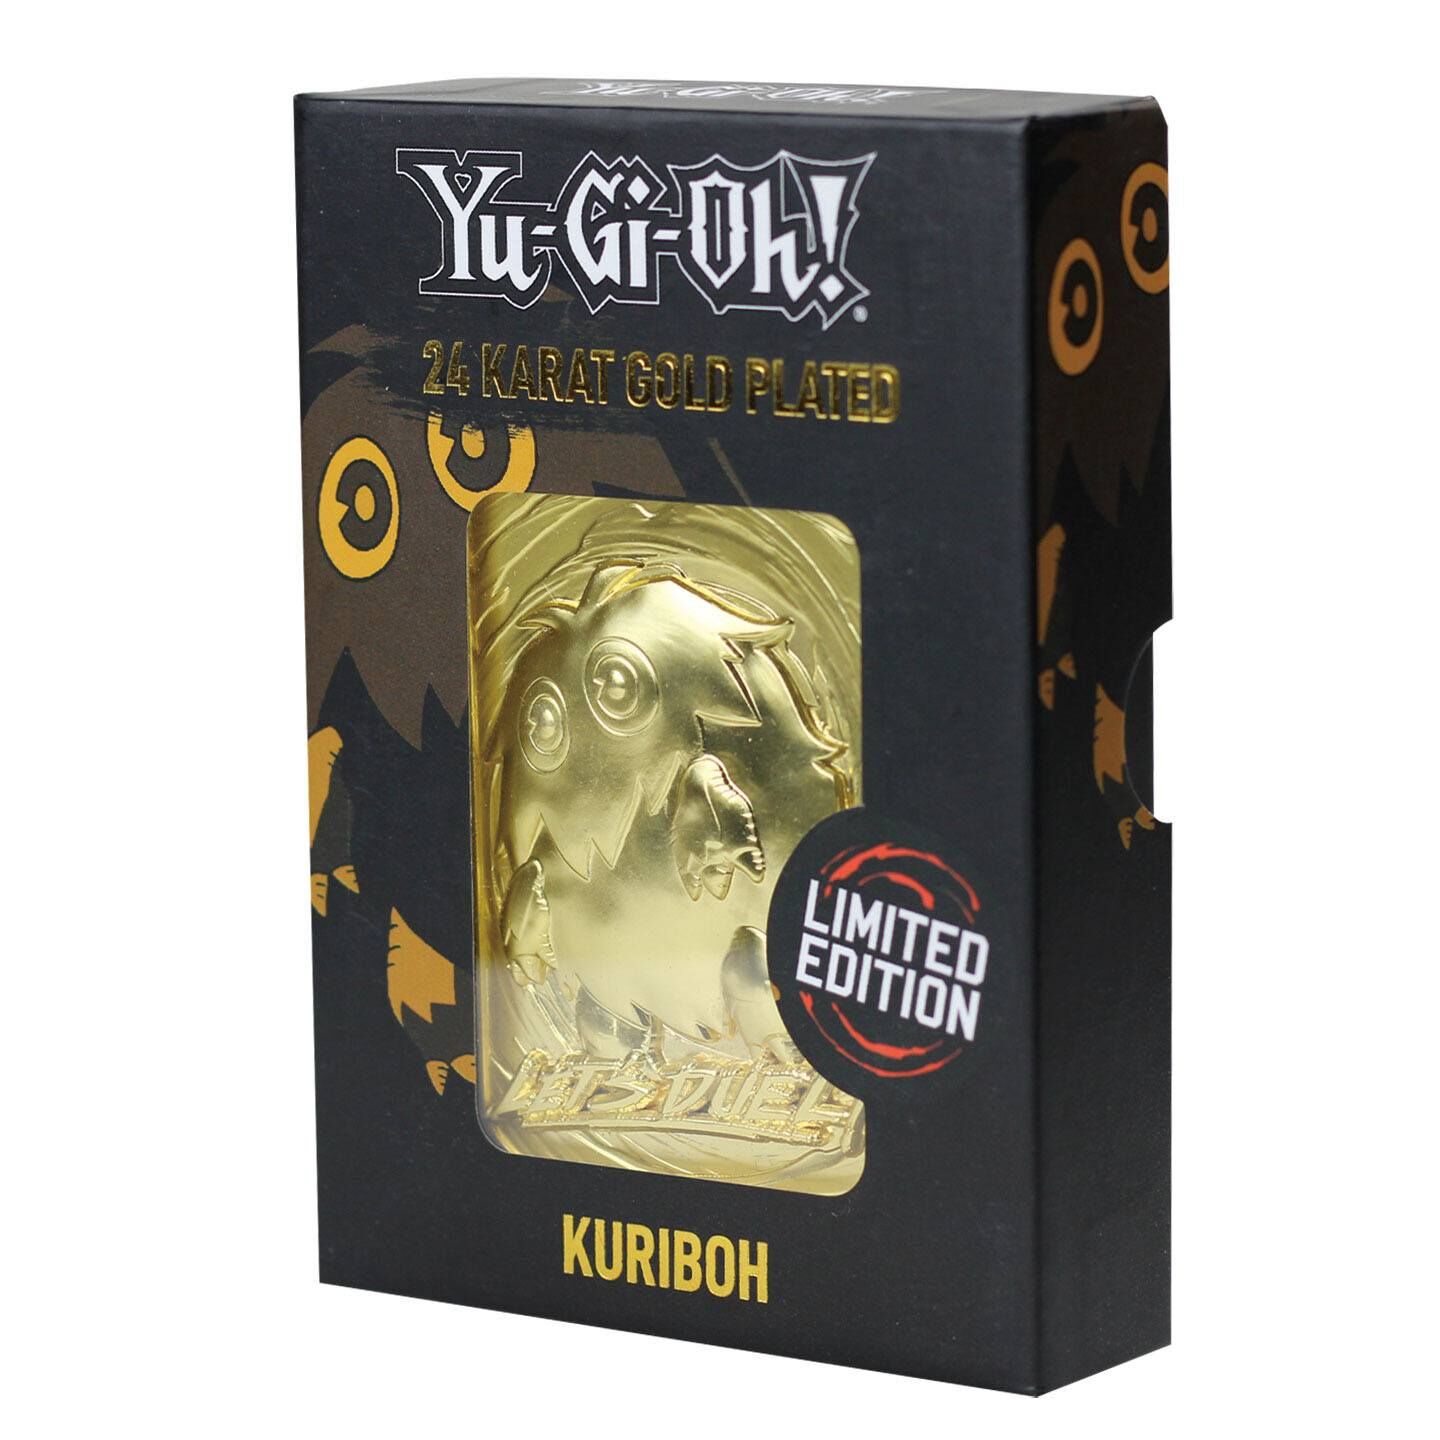 Yu-Gi-Oh! Kuriboh 24k Gold Plated Limited Edition Card